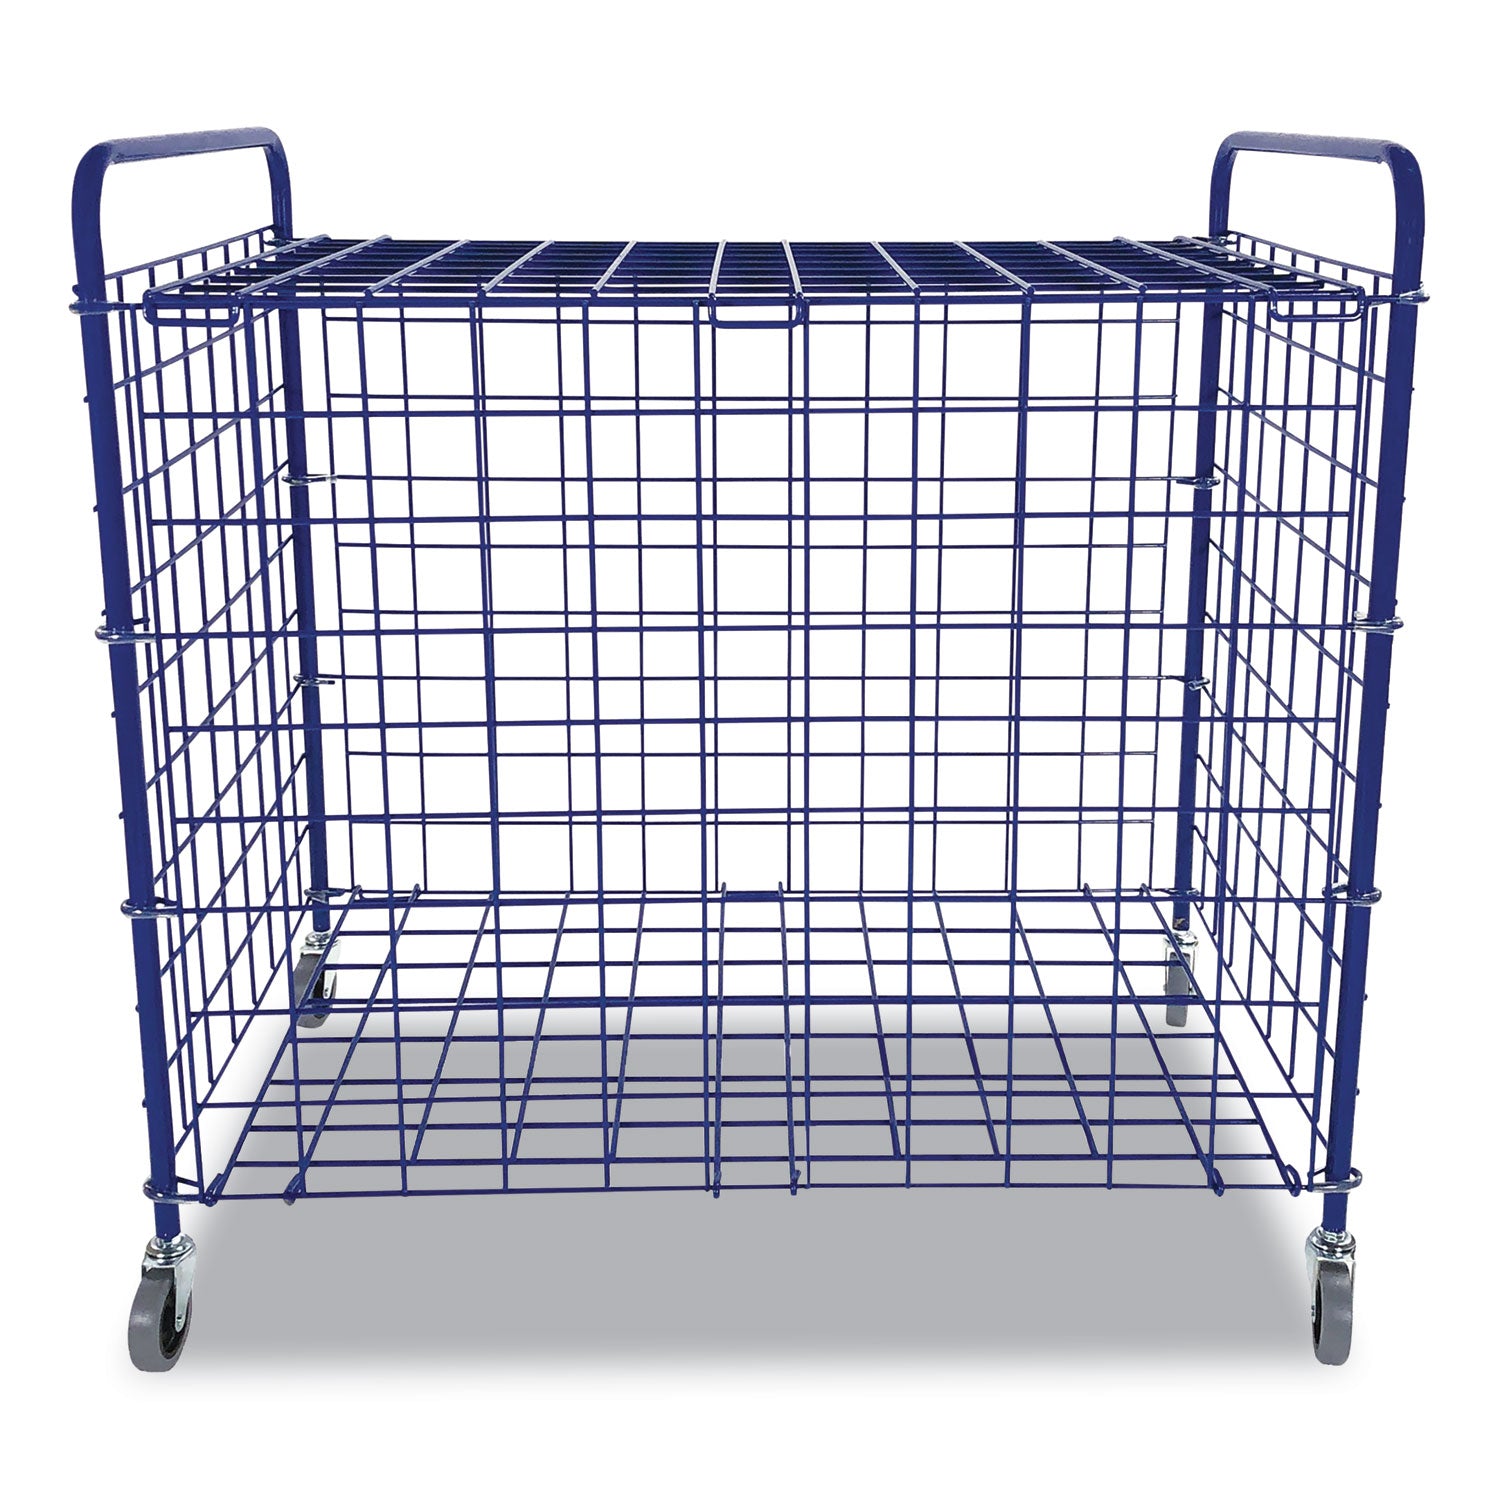 Lockable Ball Storage Cart, Fits Approximately 24 Balls, Metal, 37" x 22" x 20", Blue - 